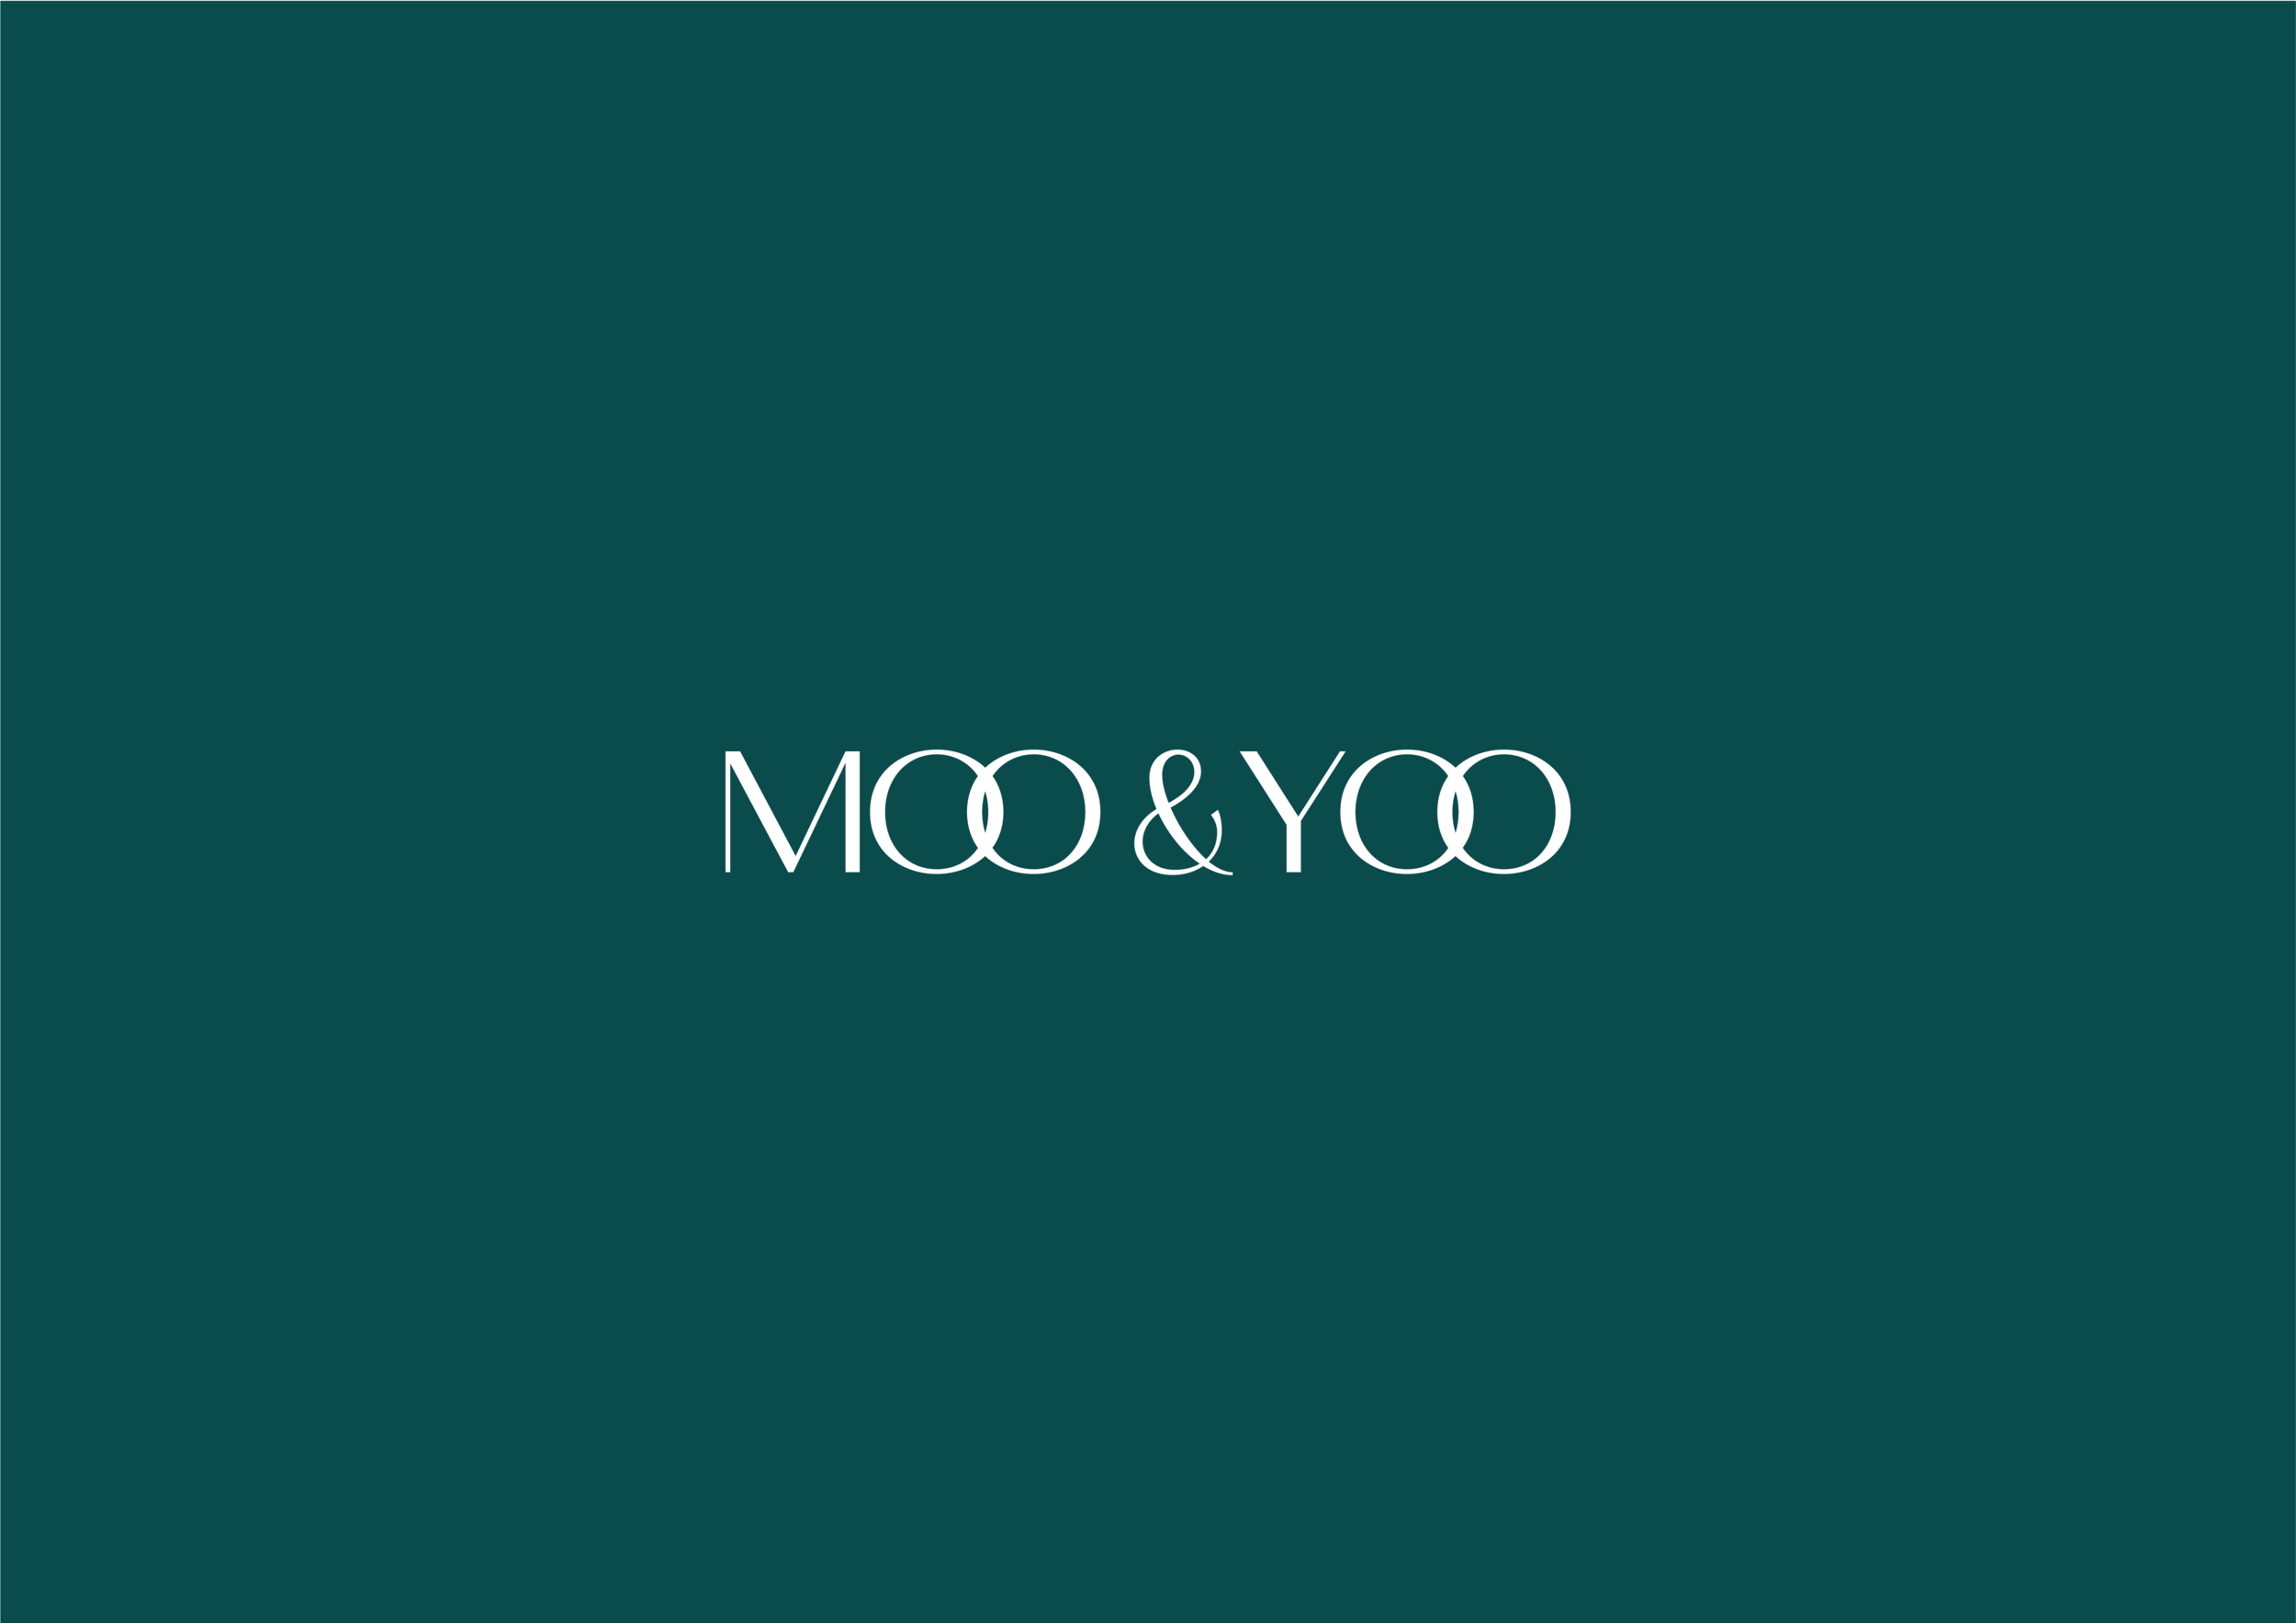 Branding design company UK. Moo &amp; Yoo company font logo with dark green background